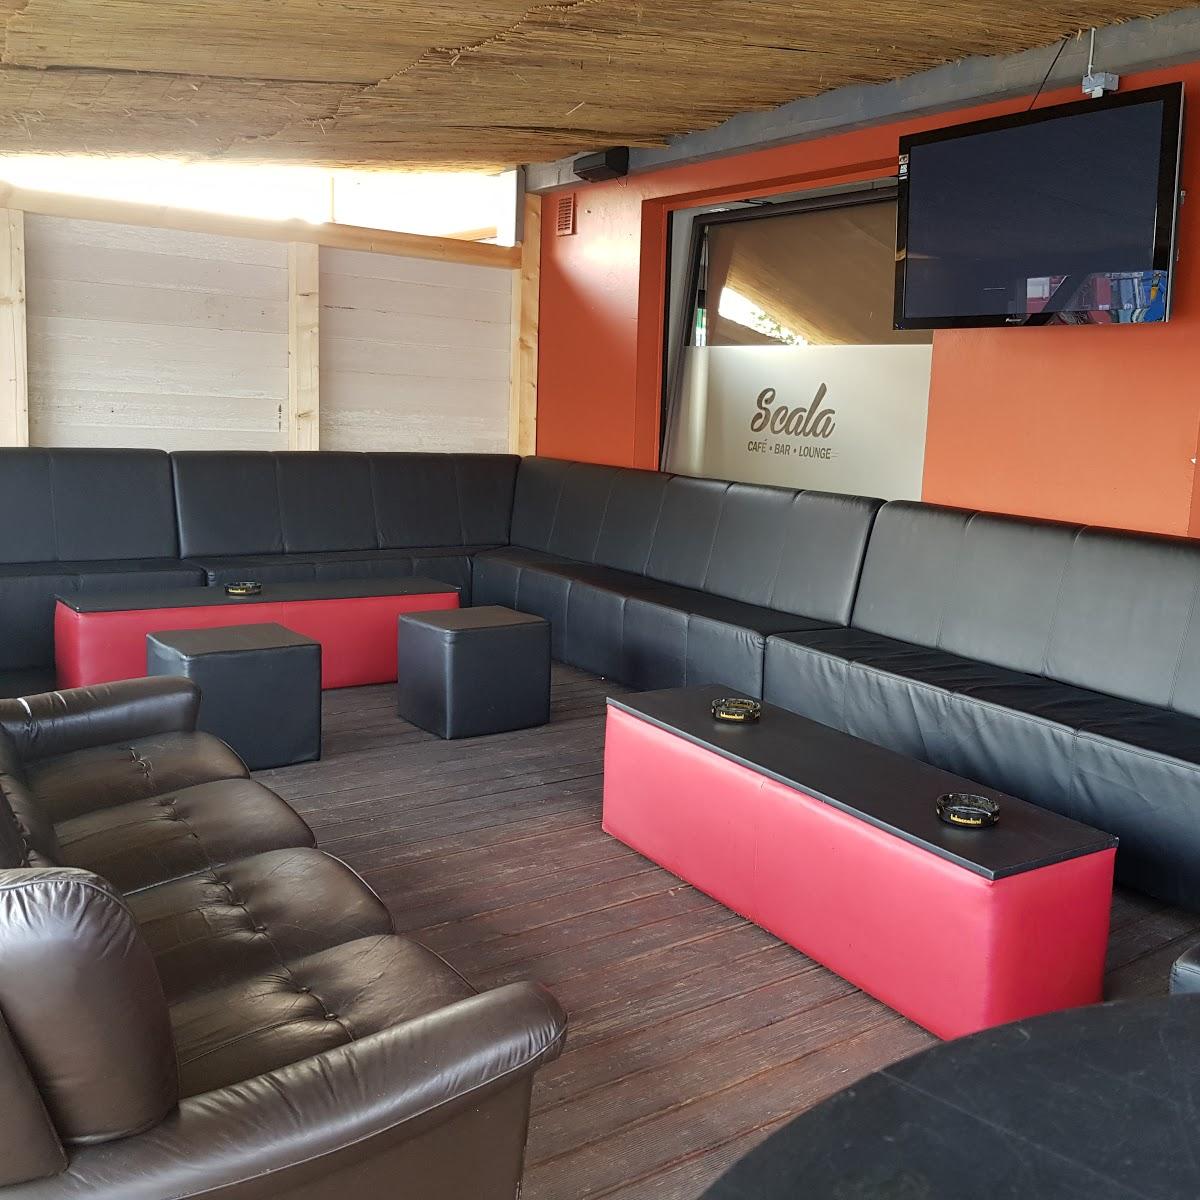 Restaurant "Scala | Café - Bar - Lounge" in Versmold